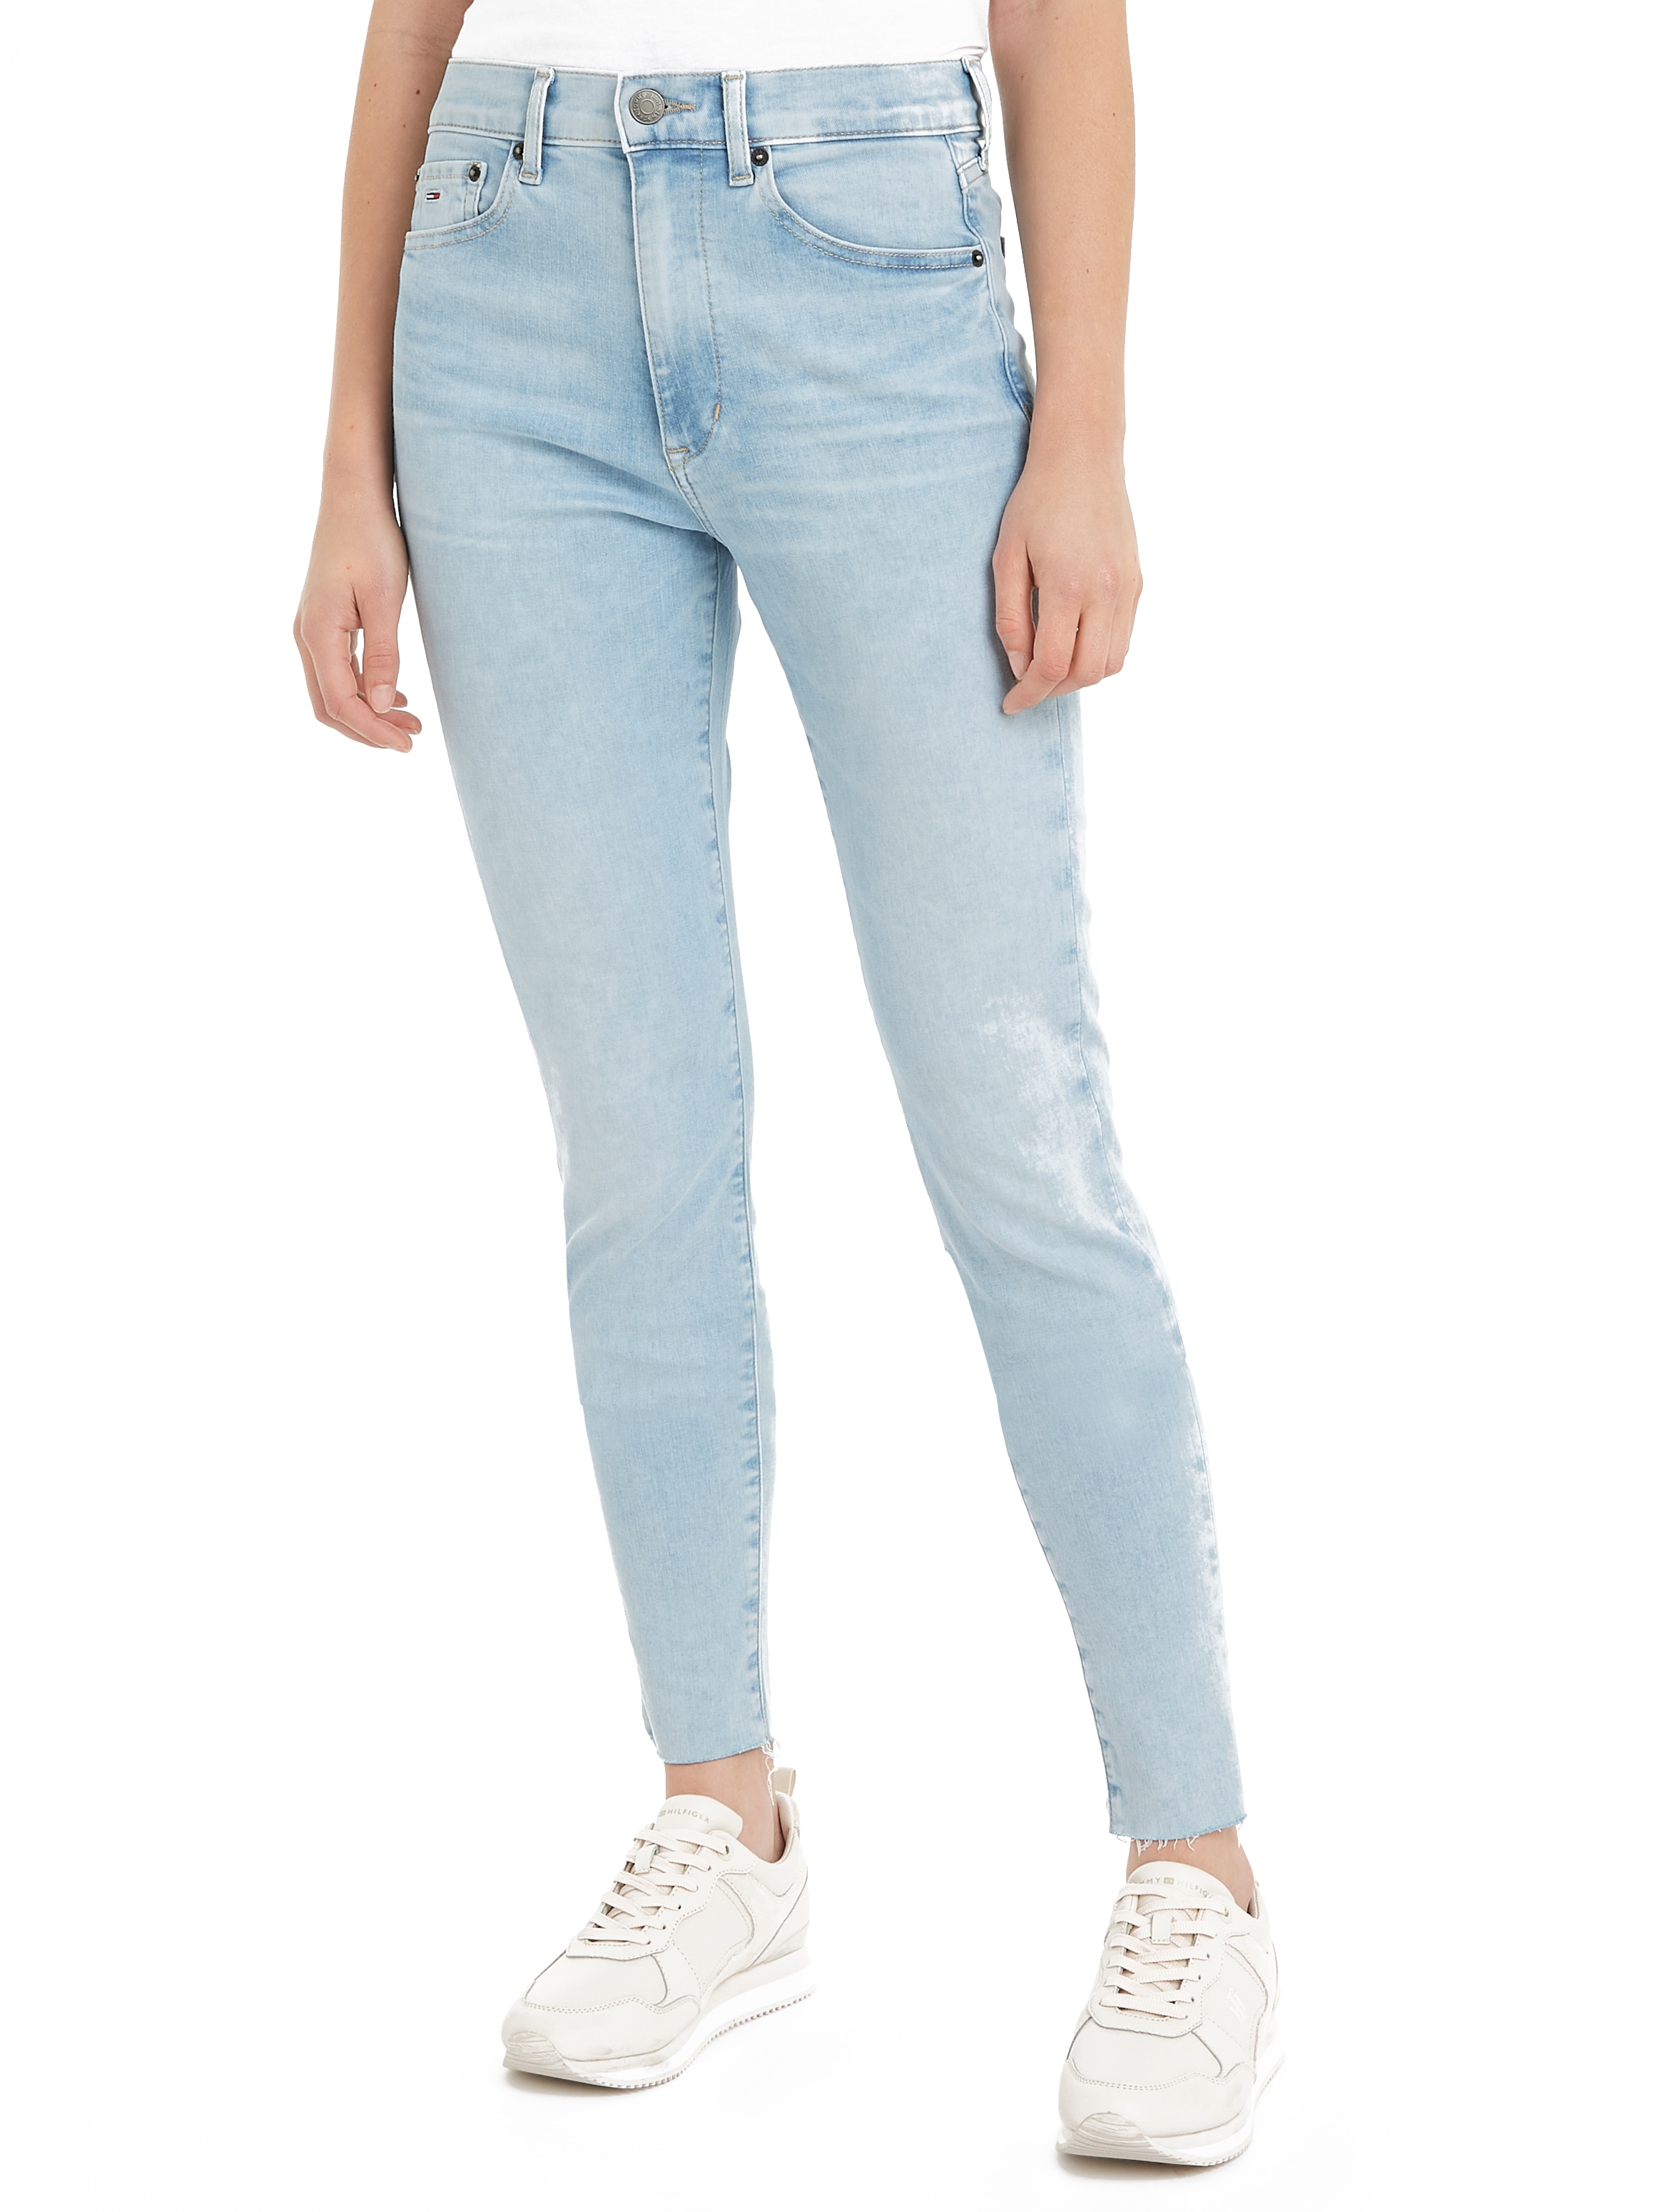 Tommy Jeans Bequeme Jeans »Sylvia Skinny Slim Jeans Hohe Leibhöhe«, mit Ledermarkenlabel